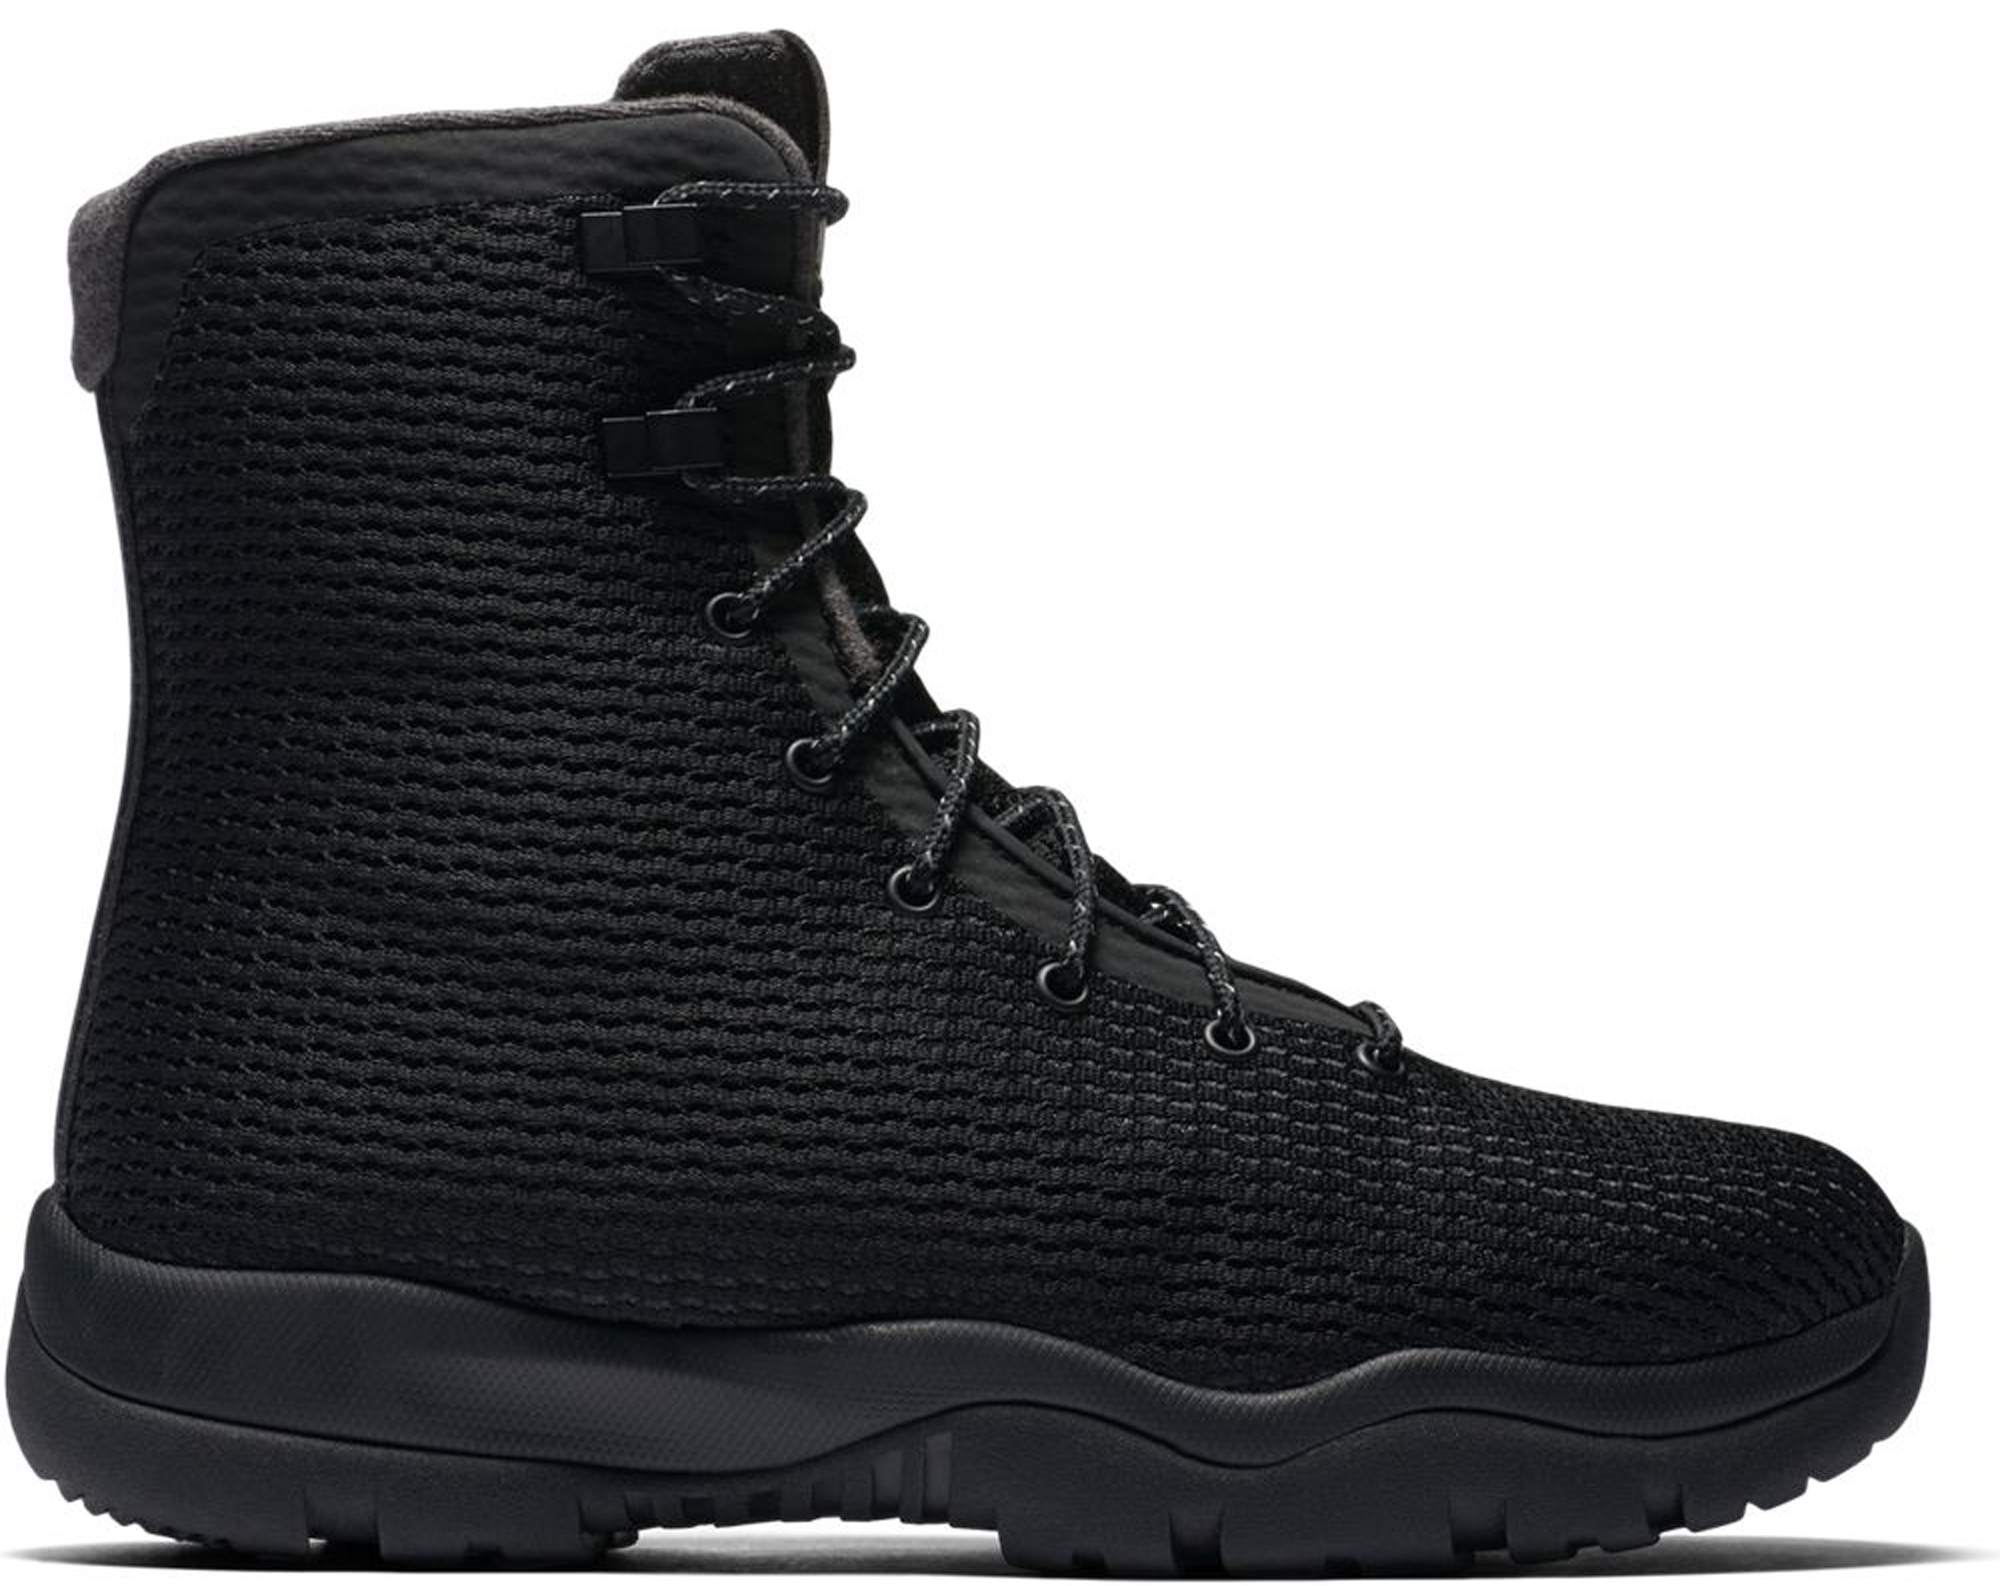 Jordan Future Boot Black - 854554-002 - US